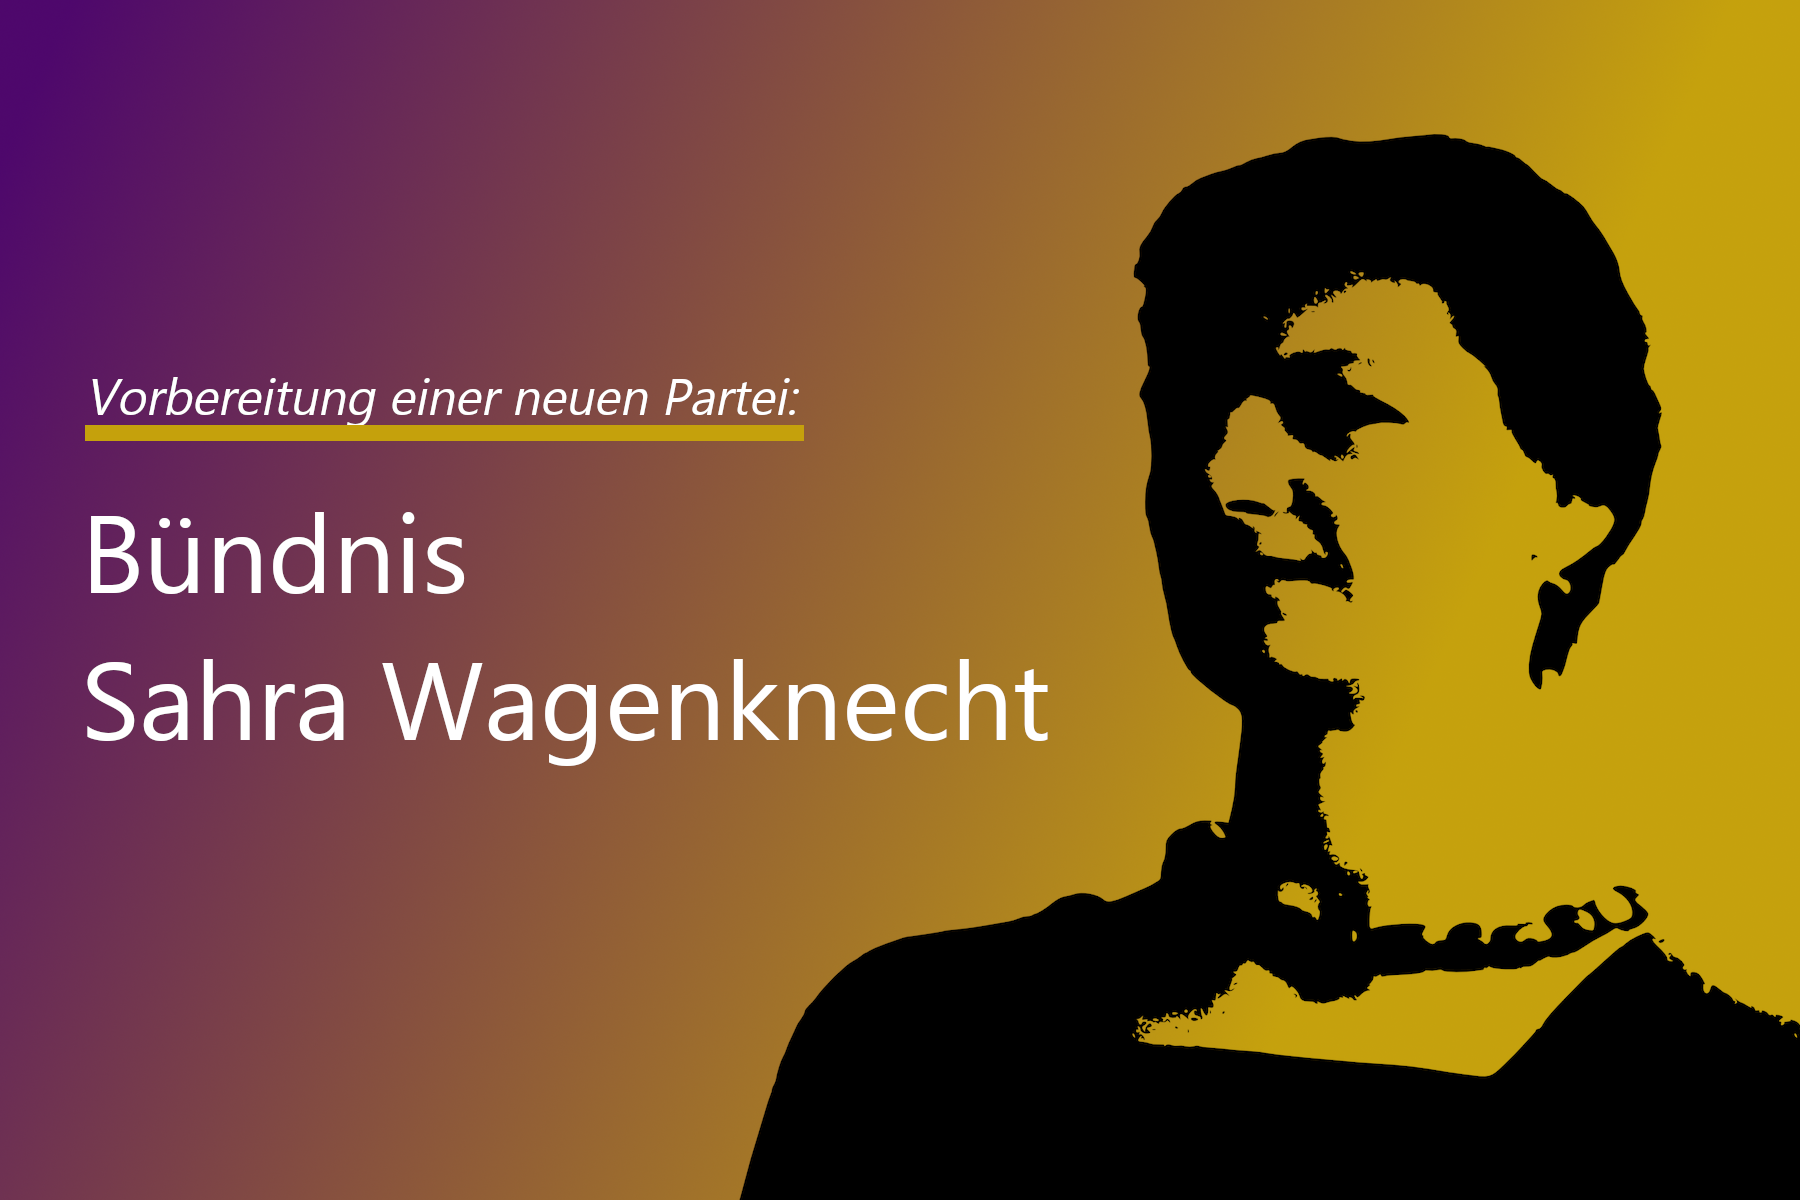 You are currently viewing Das will das neue Wagenknecht-Bündnis